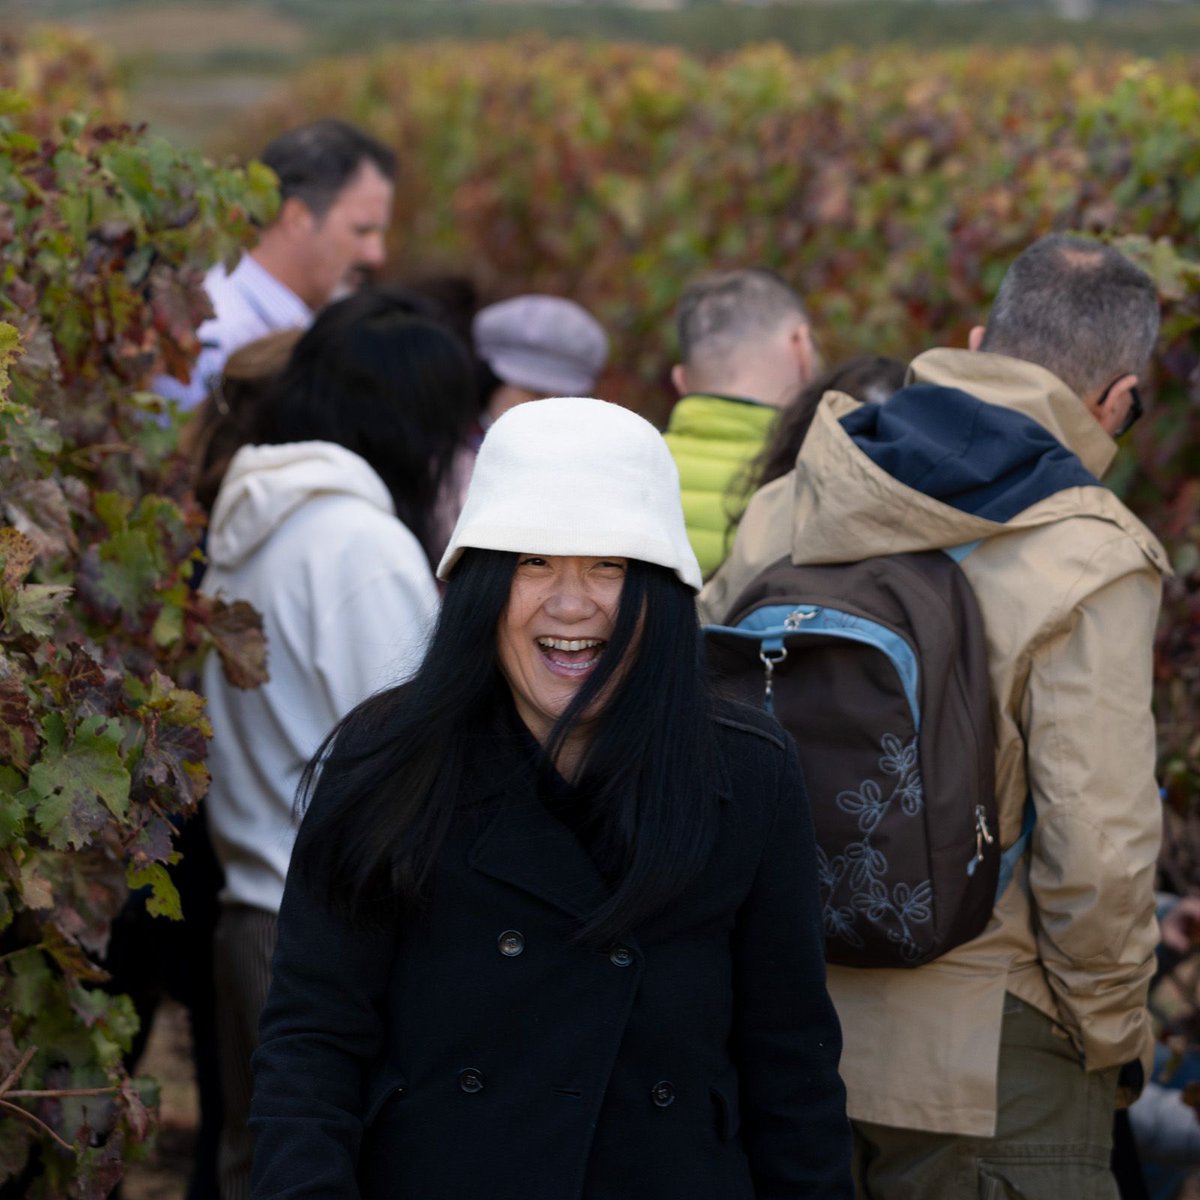 DAY 3 RECAP: Sardegna Trip, Gita Scolastica with Italian Wine Ambassadors 👉Argiolas vineyard visit. The ambassadors were in time for the sunset, the most amazing colors! 🔗 Find out more at: argiolas.it #Argiolas #sardinia #sardegna